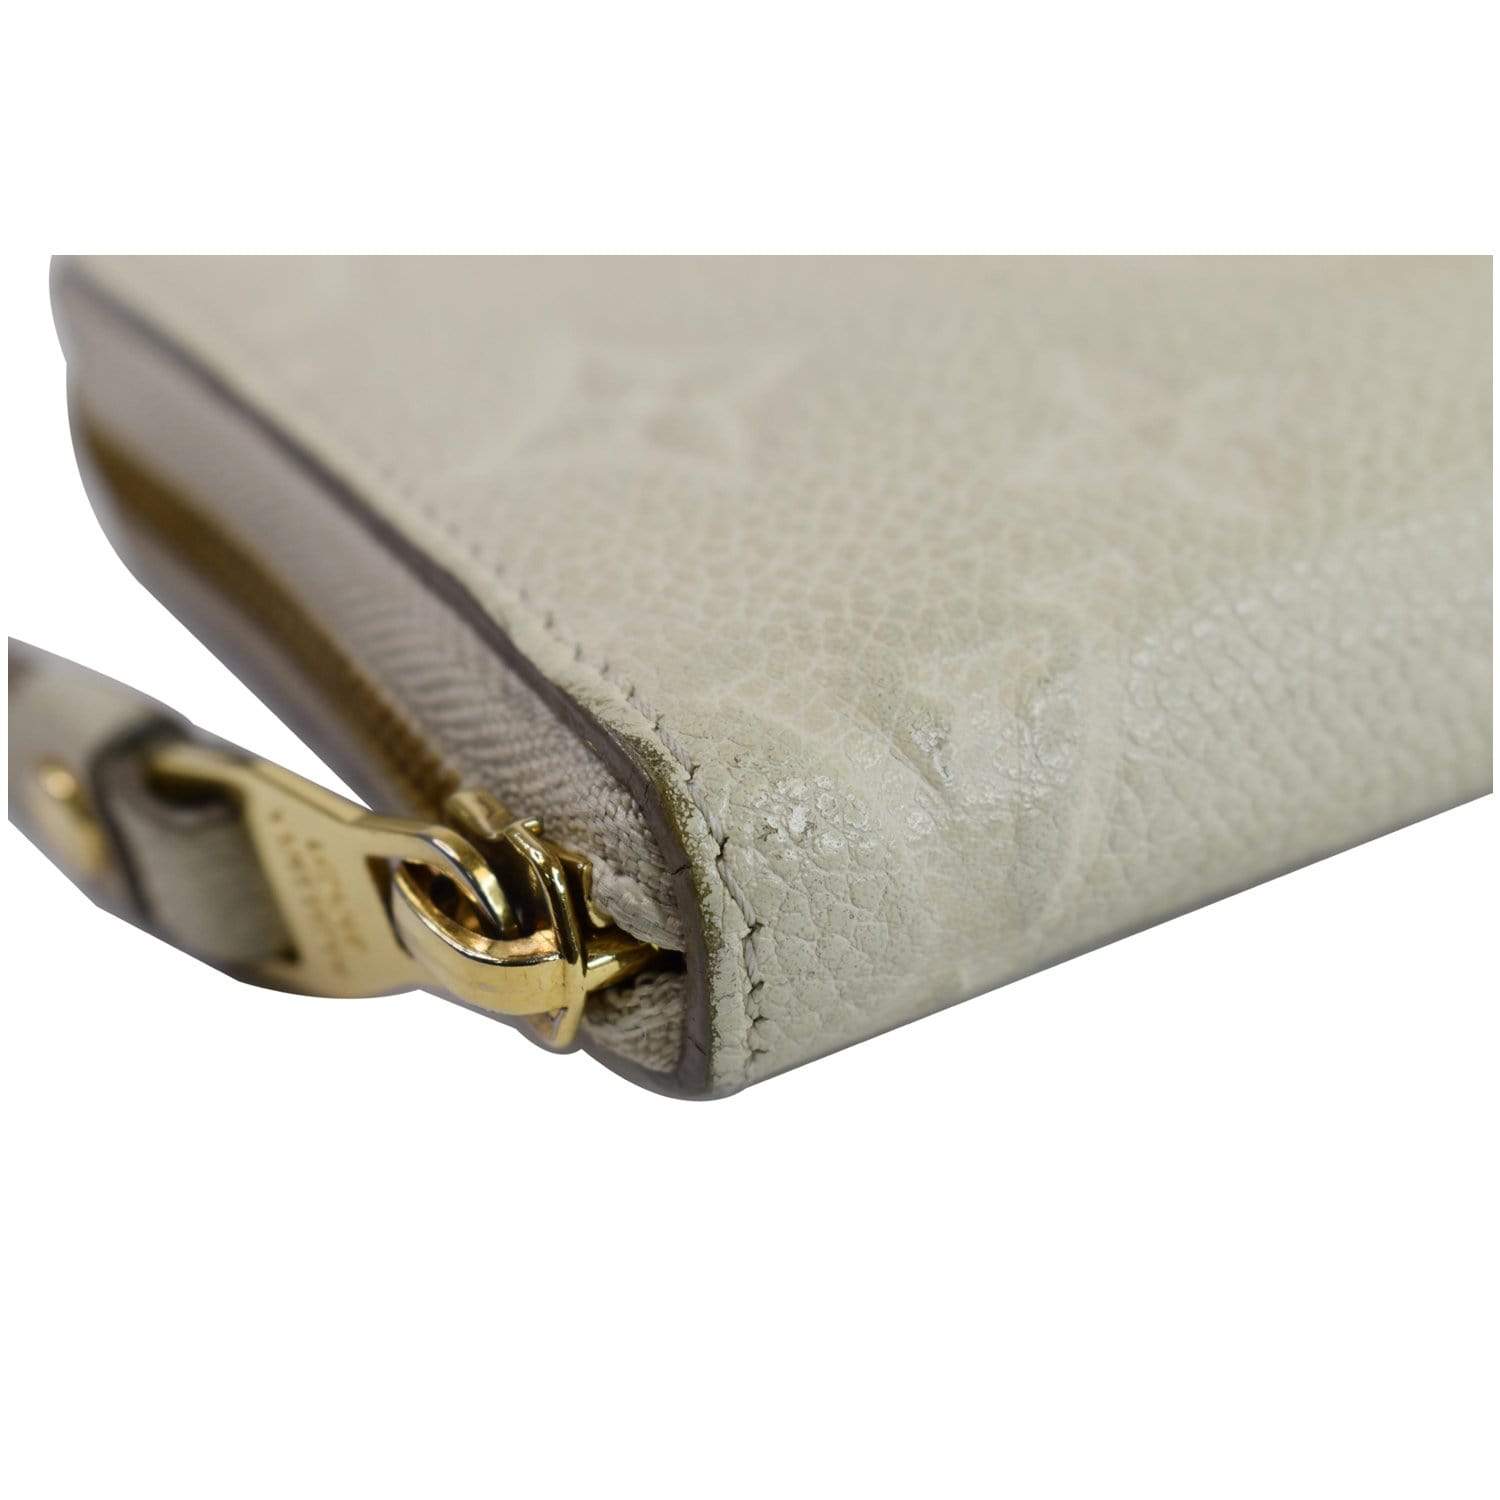 LOUIS VUITTON Compact Wallet PORTEFEUILLE CLEA Japan Limited White